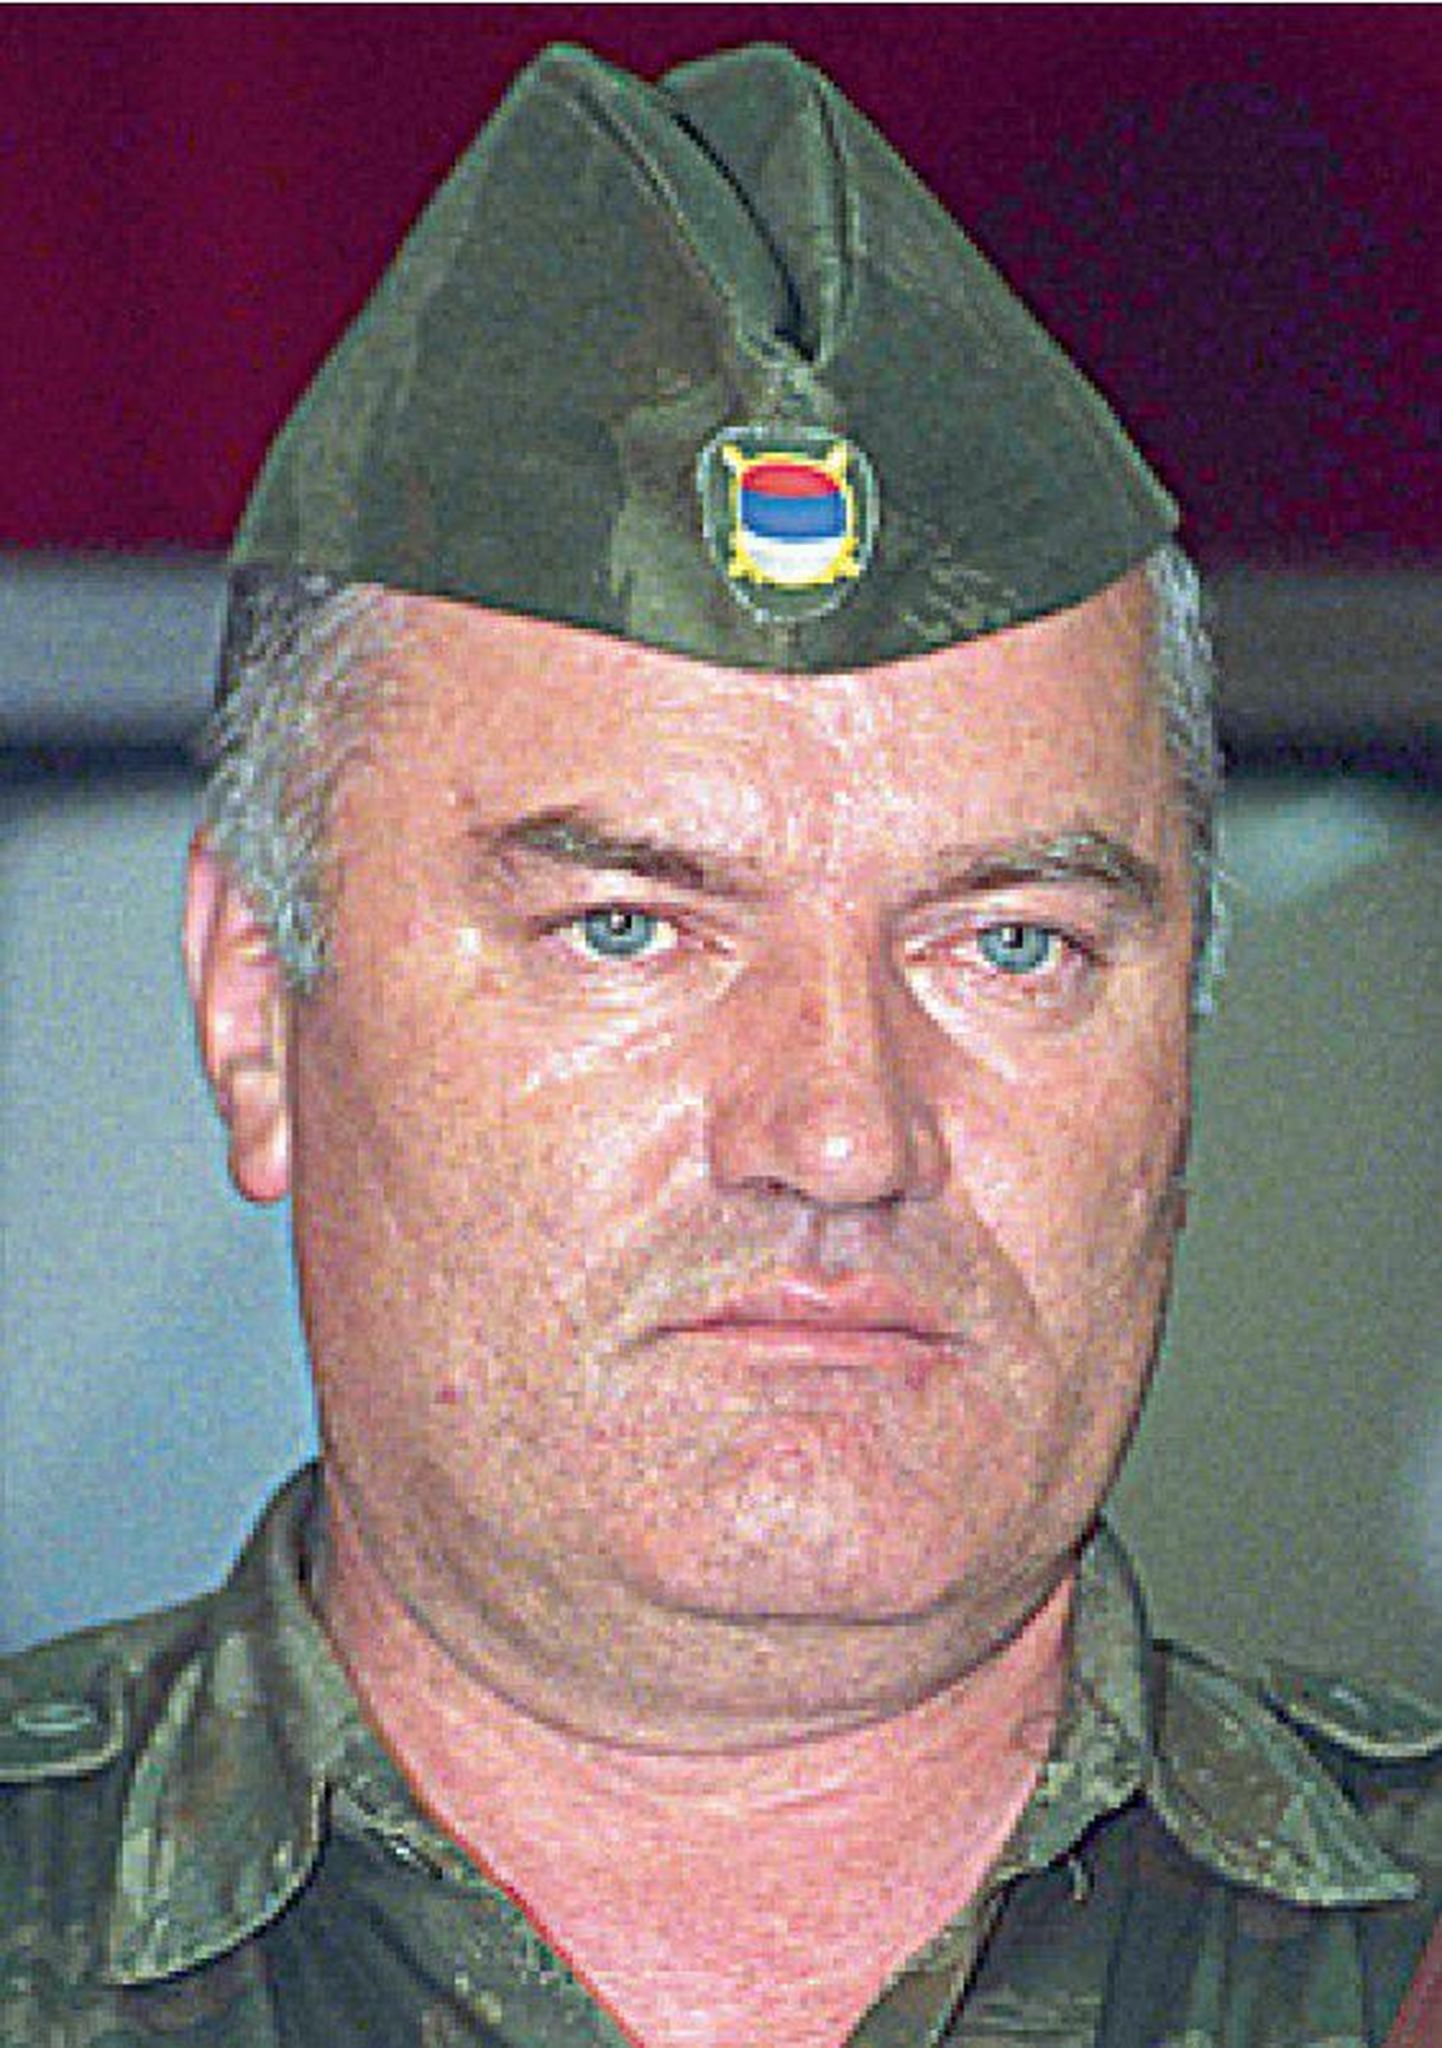 Seni tabamata Ratko Mladić.